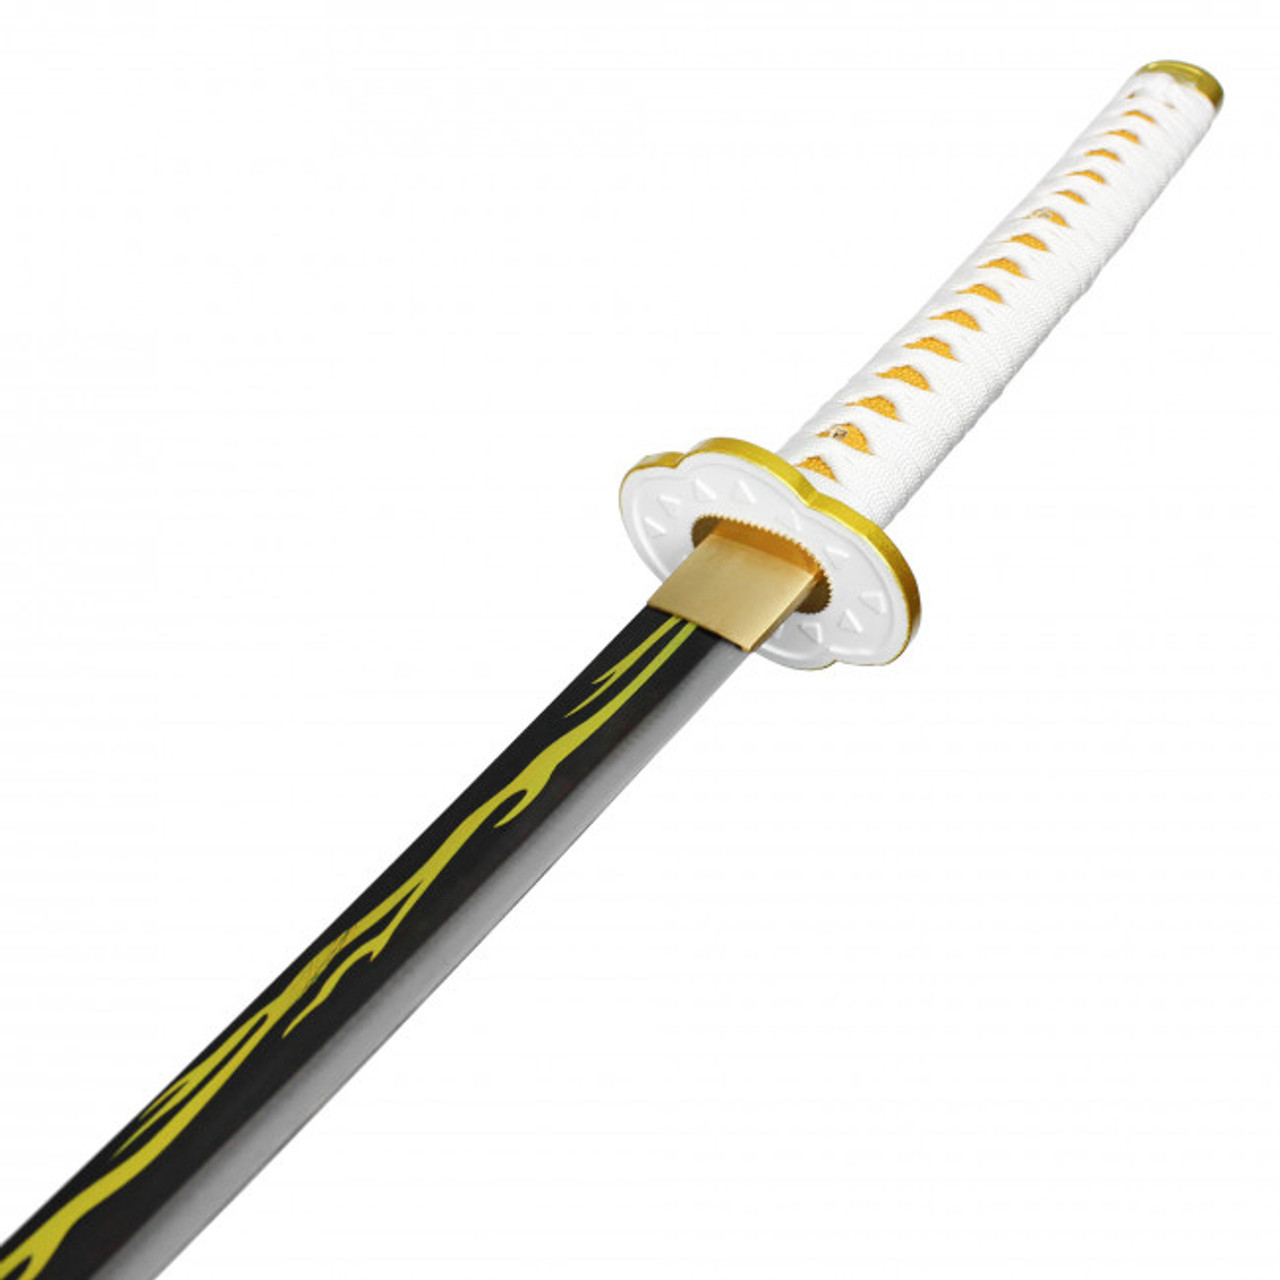 41" 1045 Carbon Steel Handmade Agatsuma Zenitsu Sword